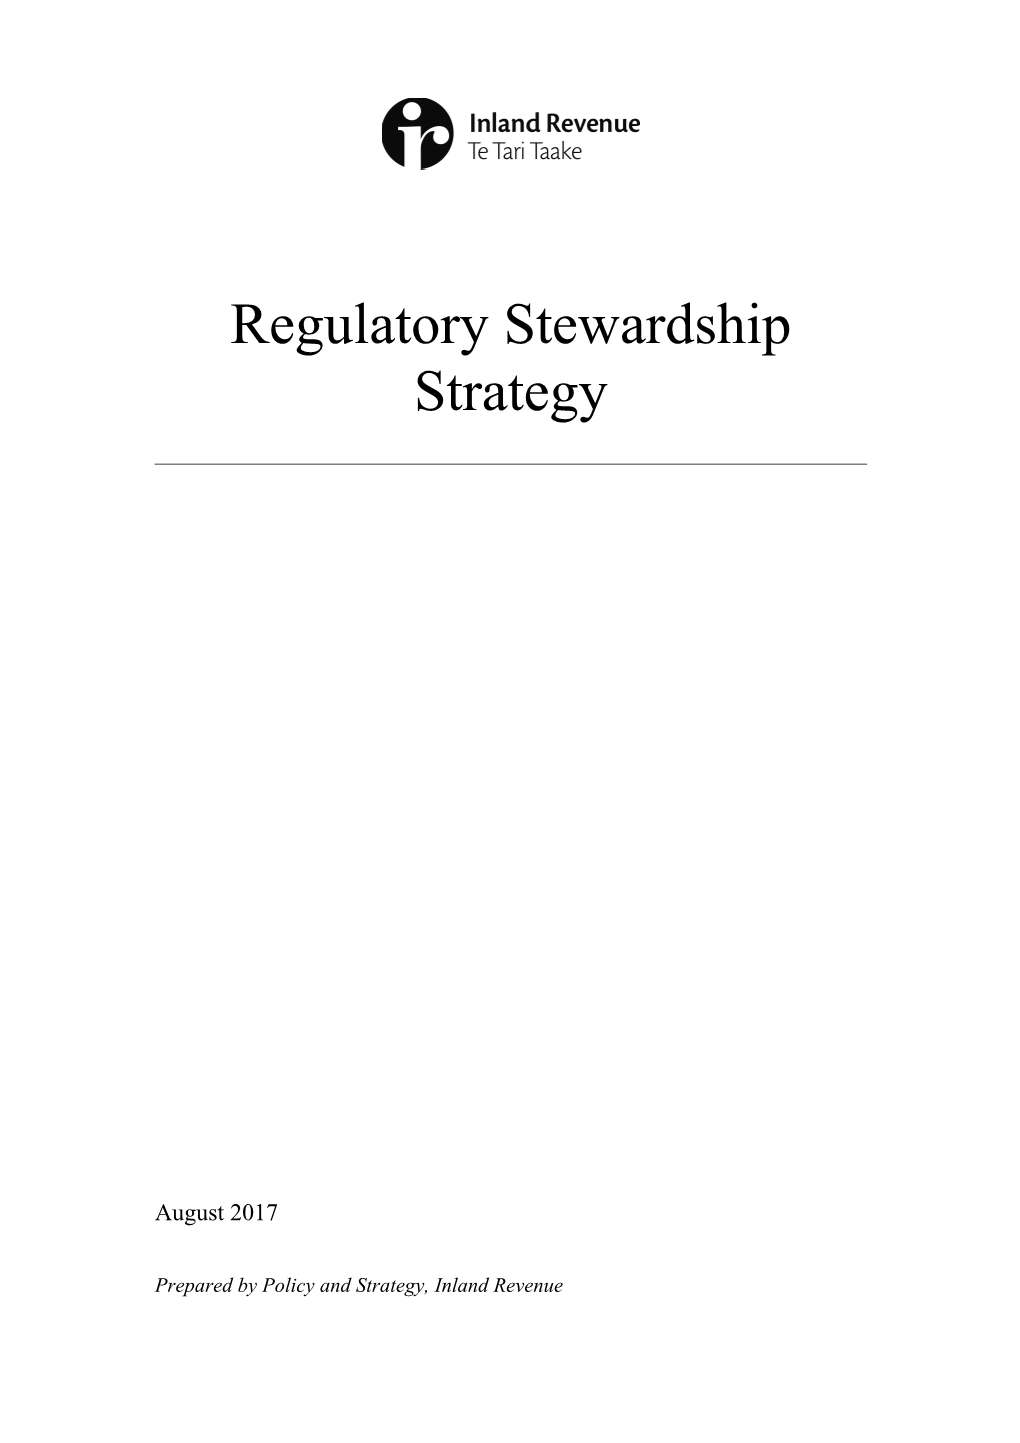 Inland Revenue - Regulatory Stewardship Strategy (August 2017)